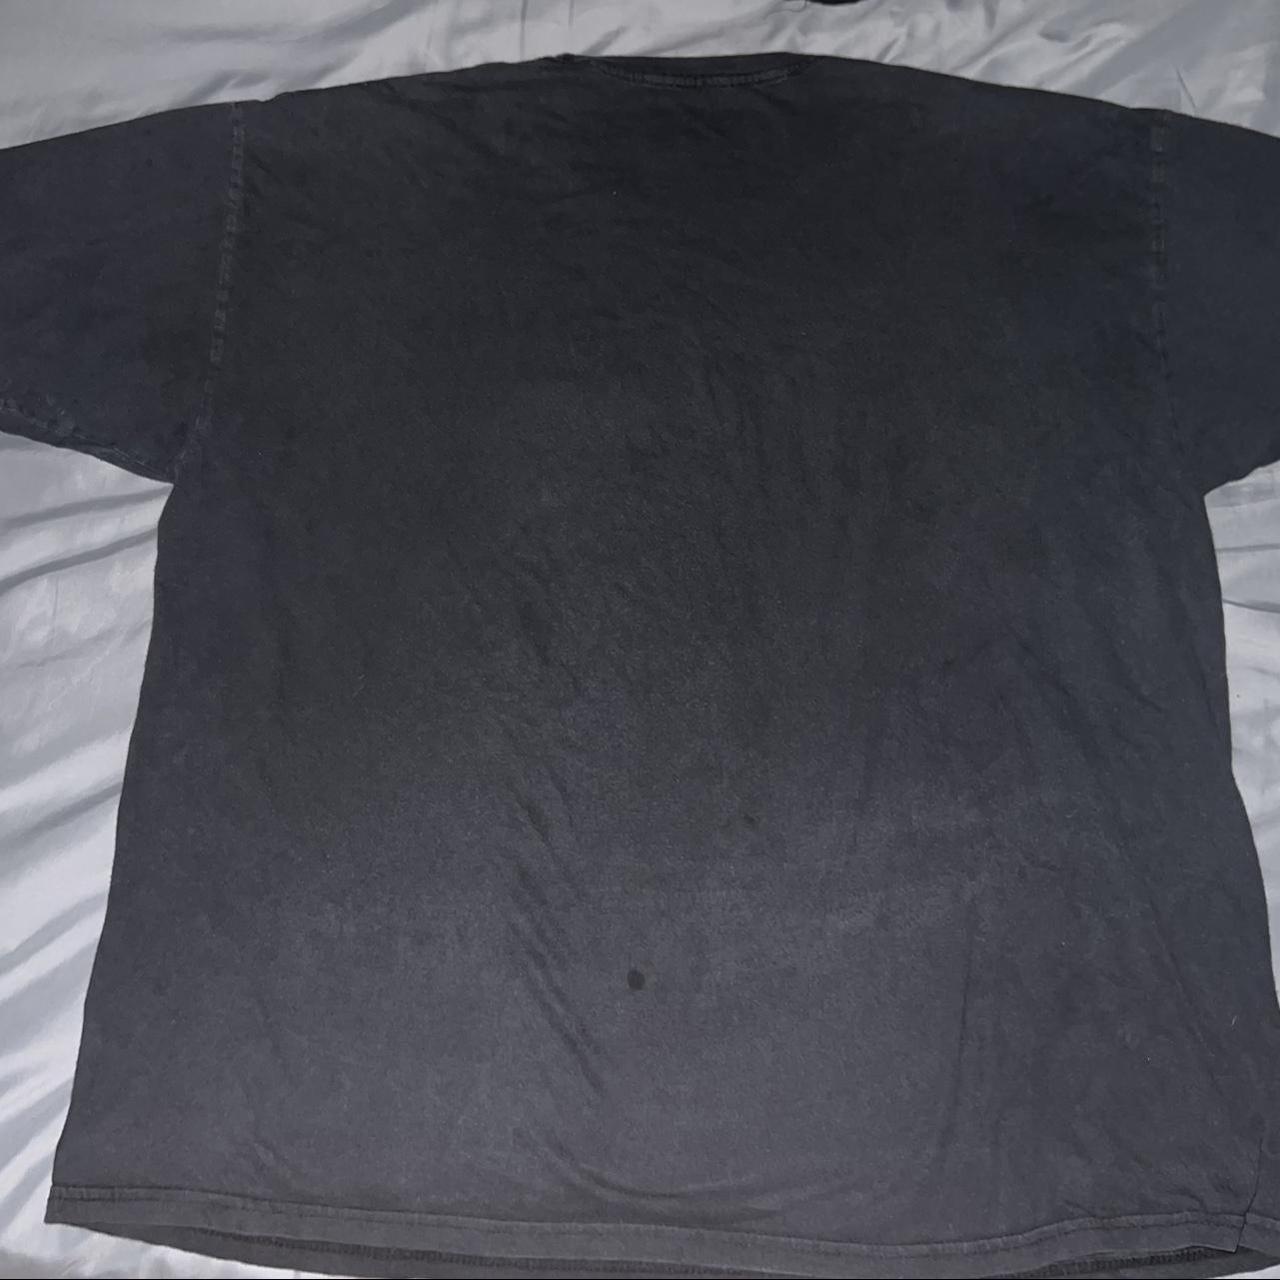 O'Neill Men's Black and Grey T-shirt | Depop